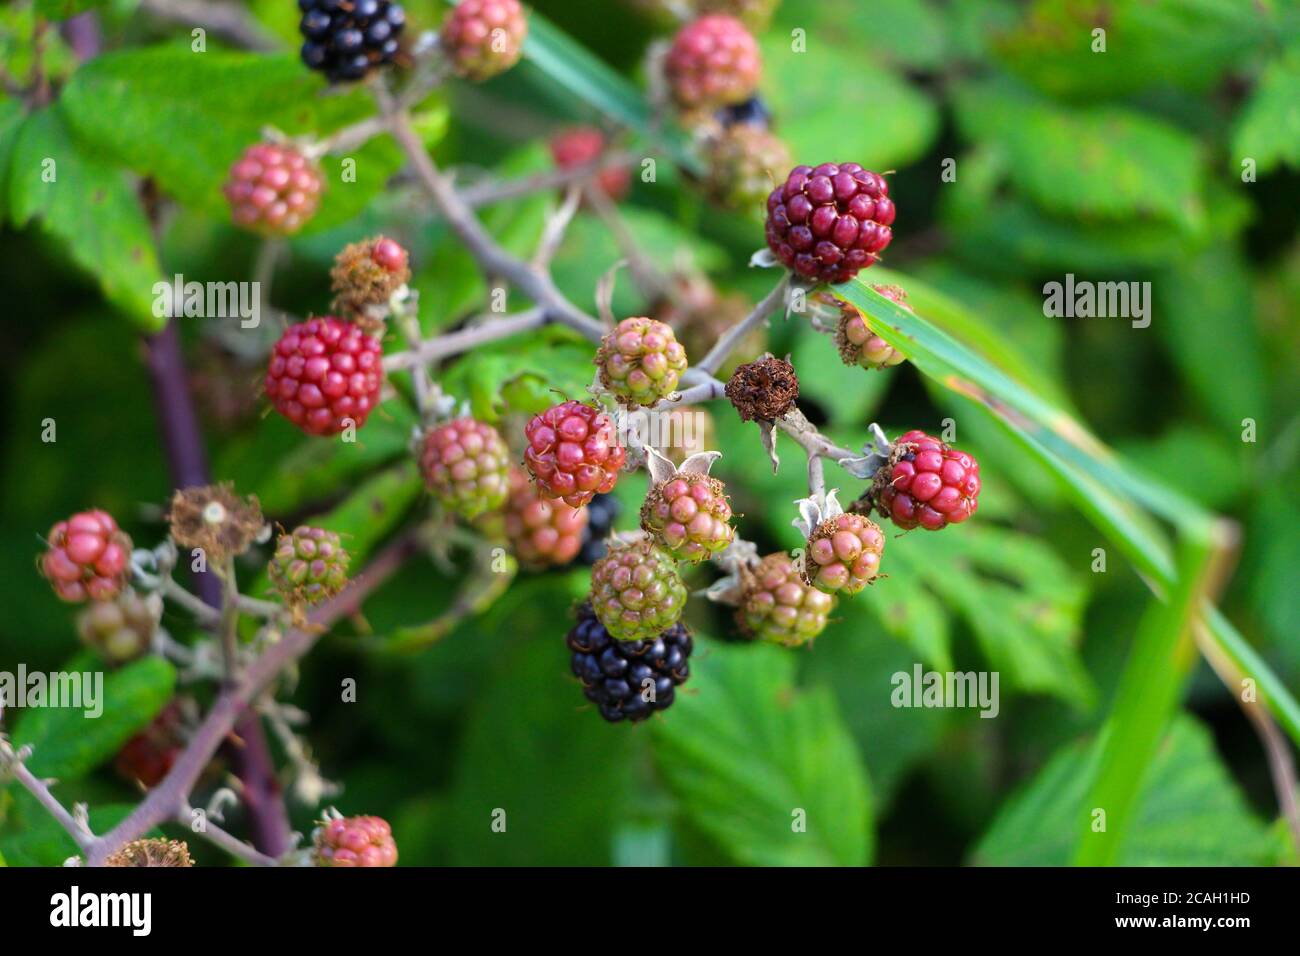 Ripening blackberries Rubus plicatus growing wild blurred background Stock Photo